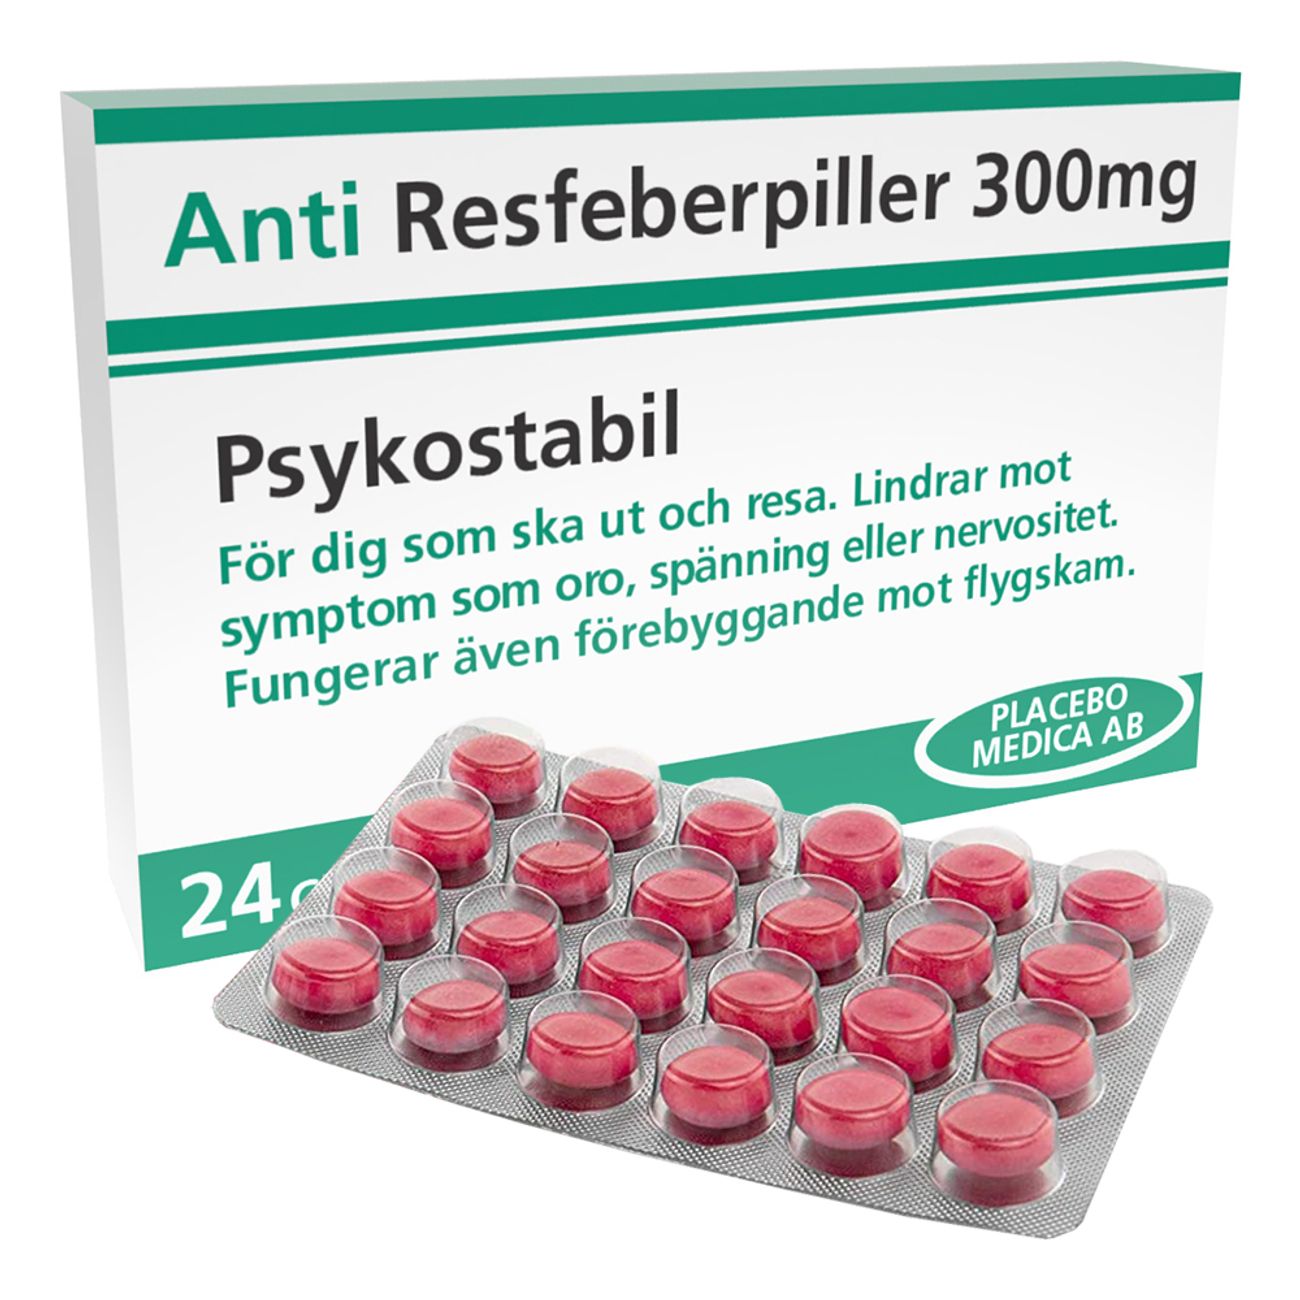 anti-resfeberpiller-choklad-69270-7